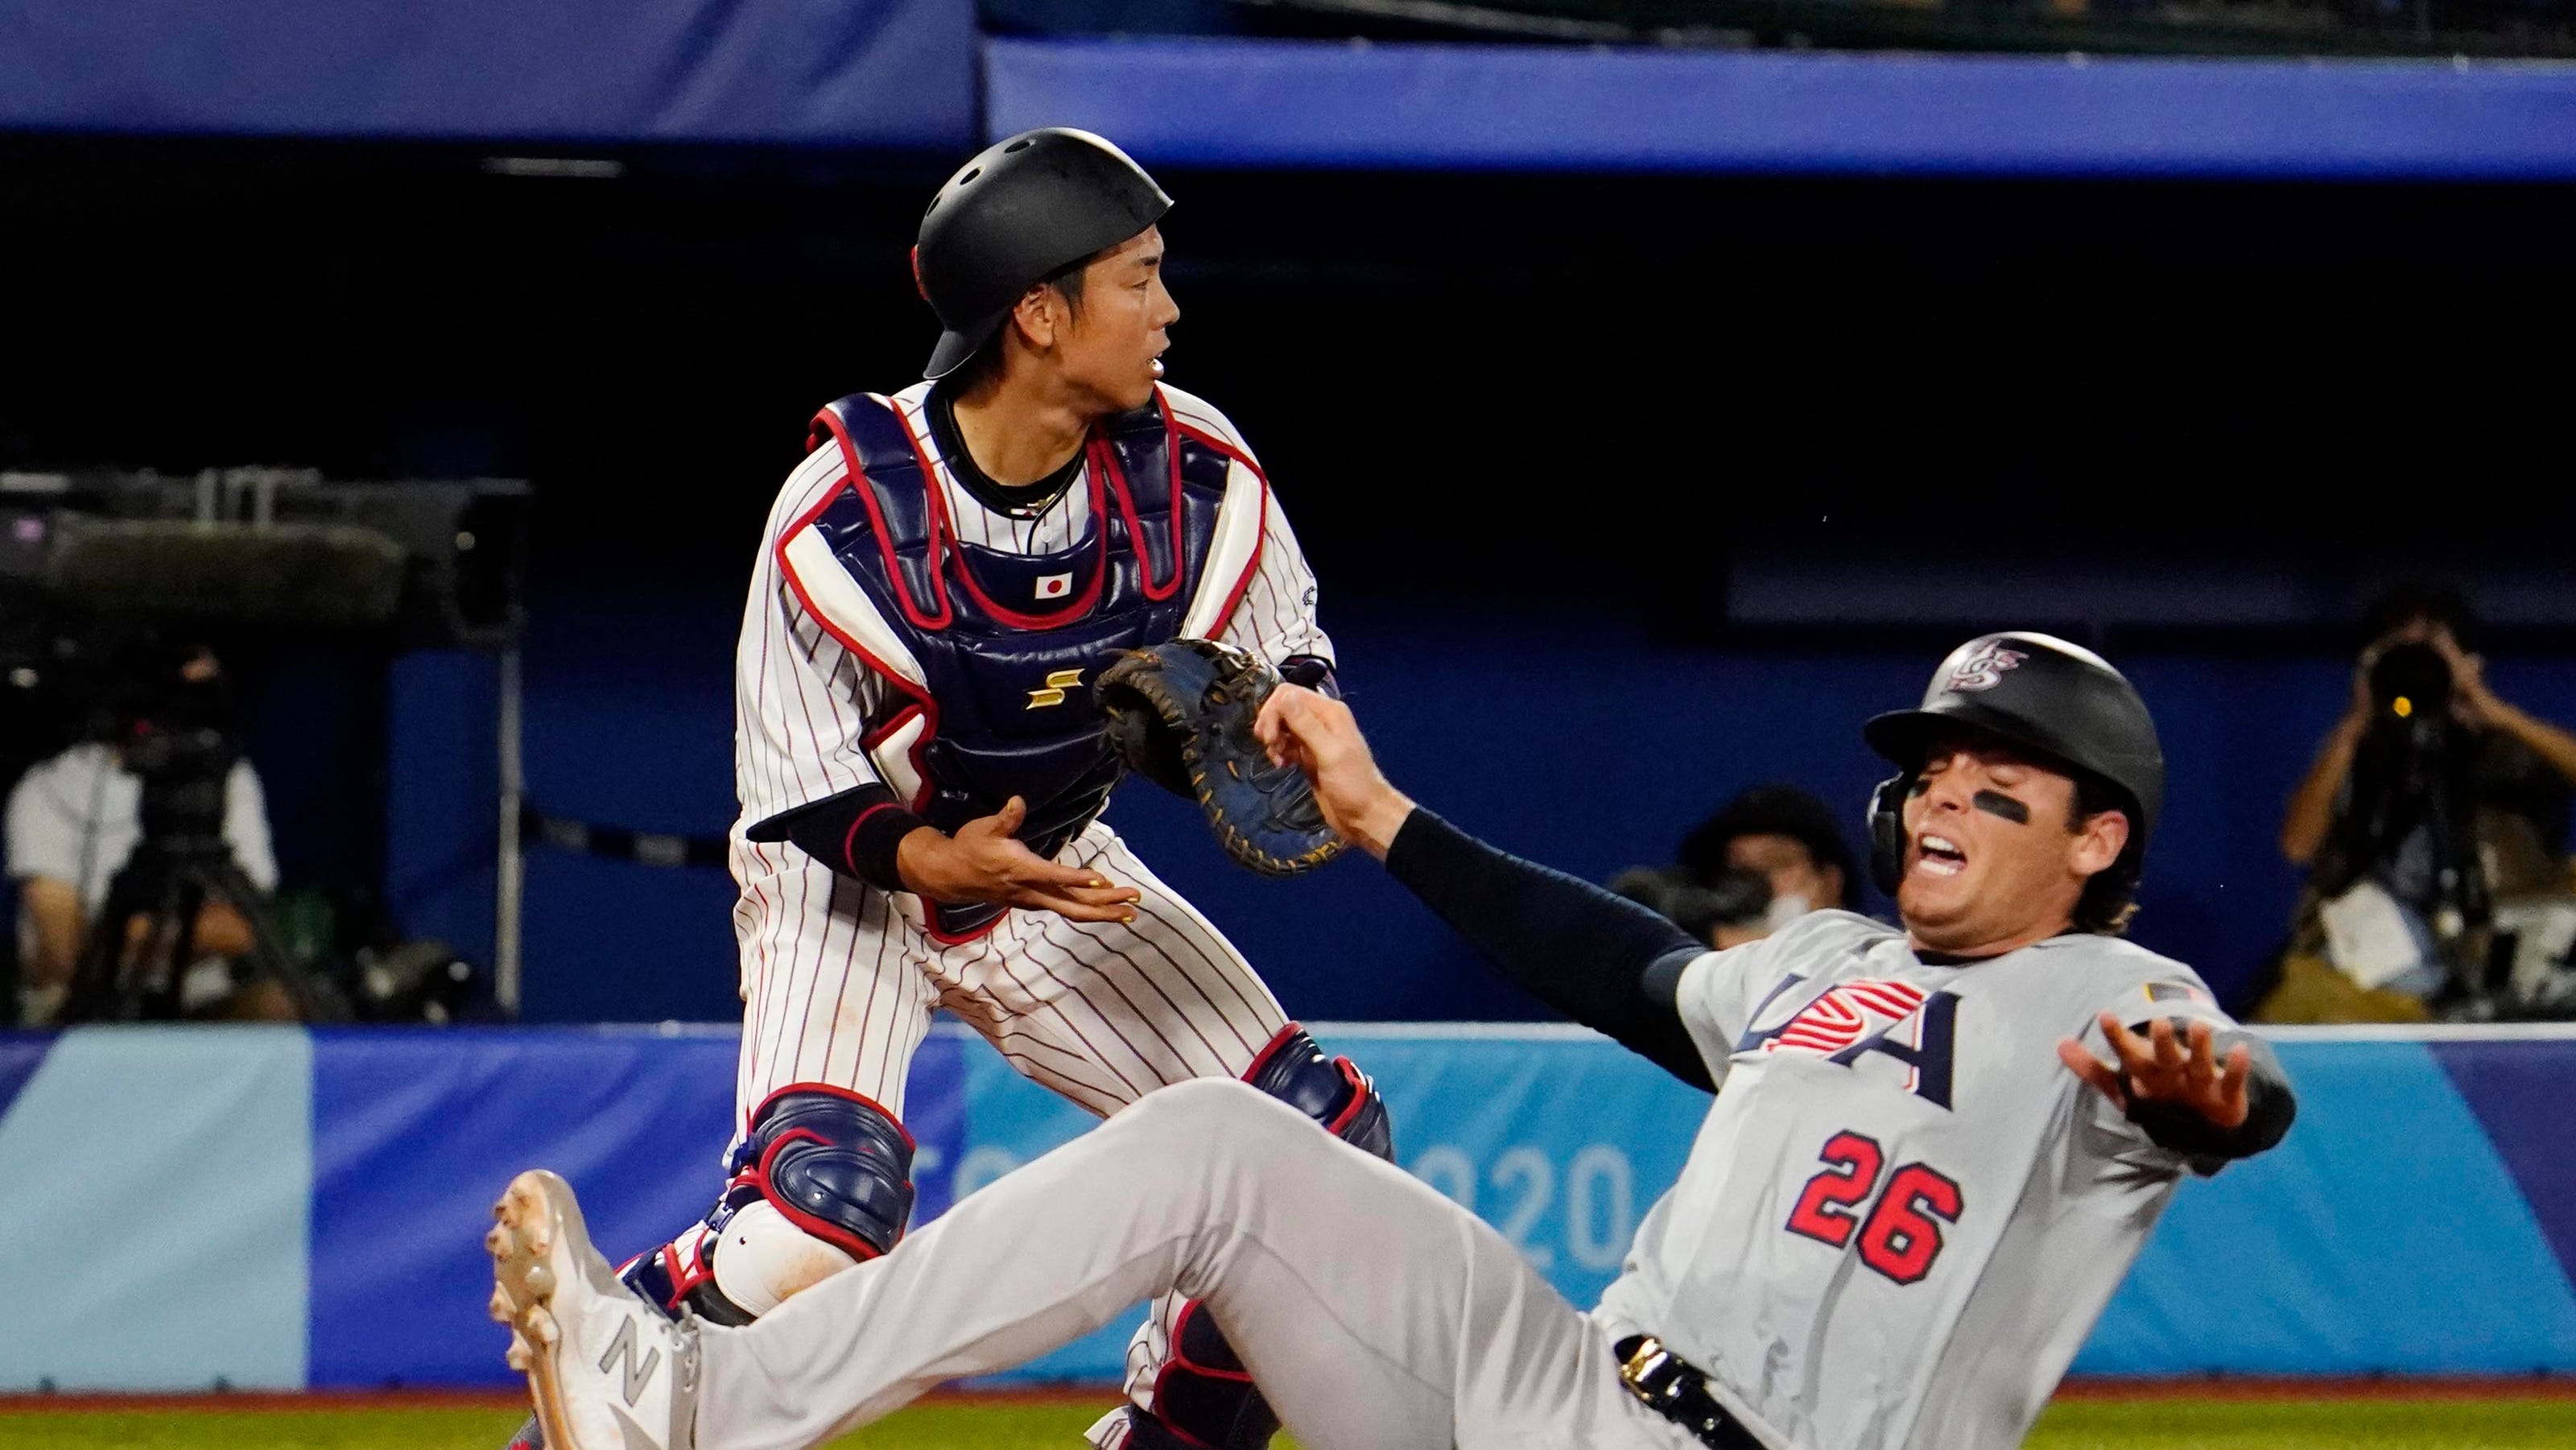 How to watch Eddy Alvarez, USA baseball in Tokyo Olympics